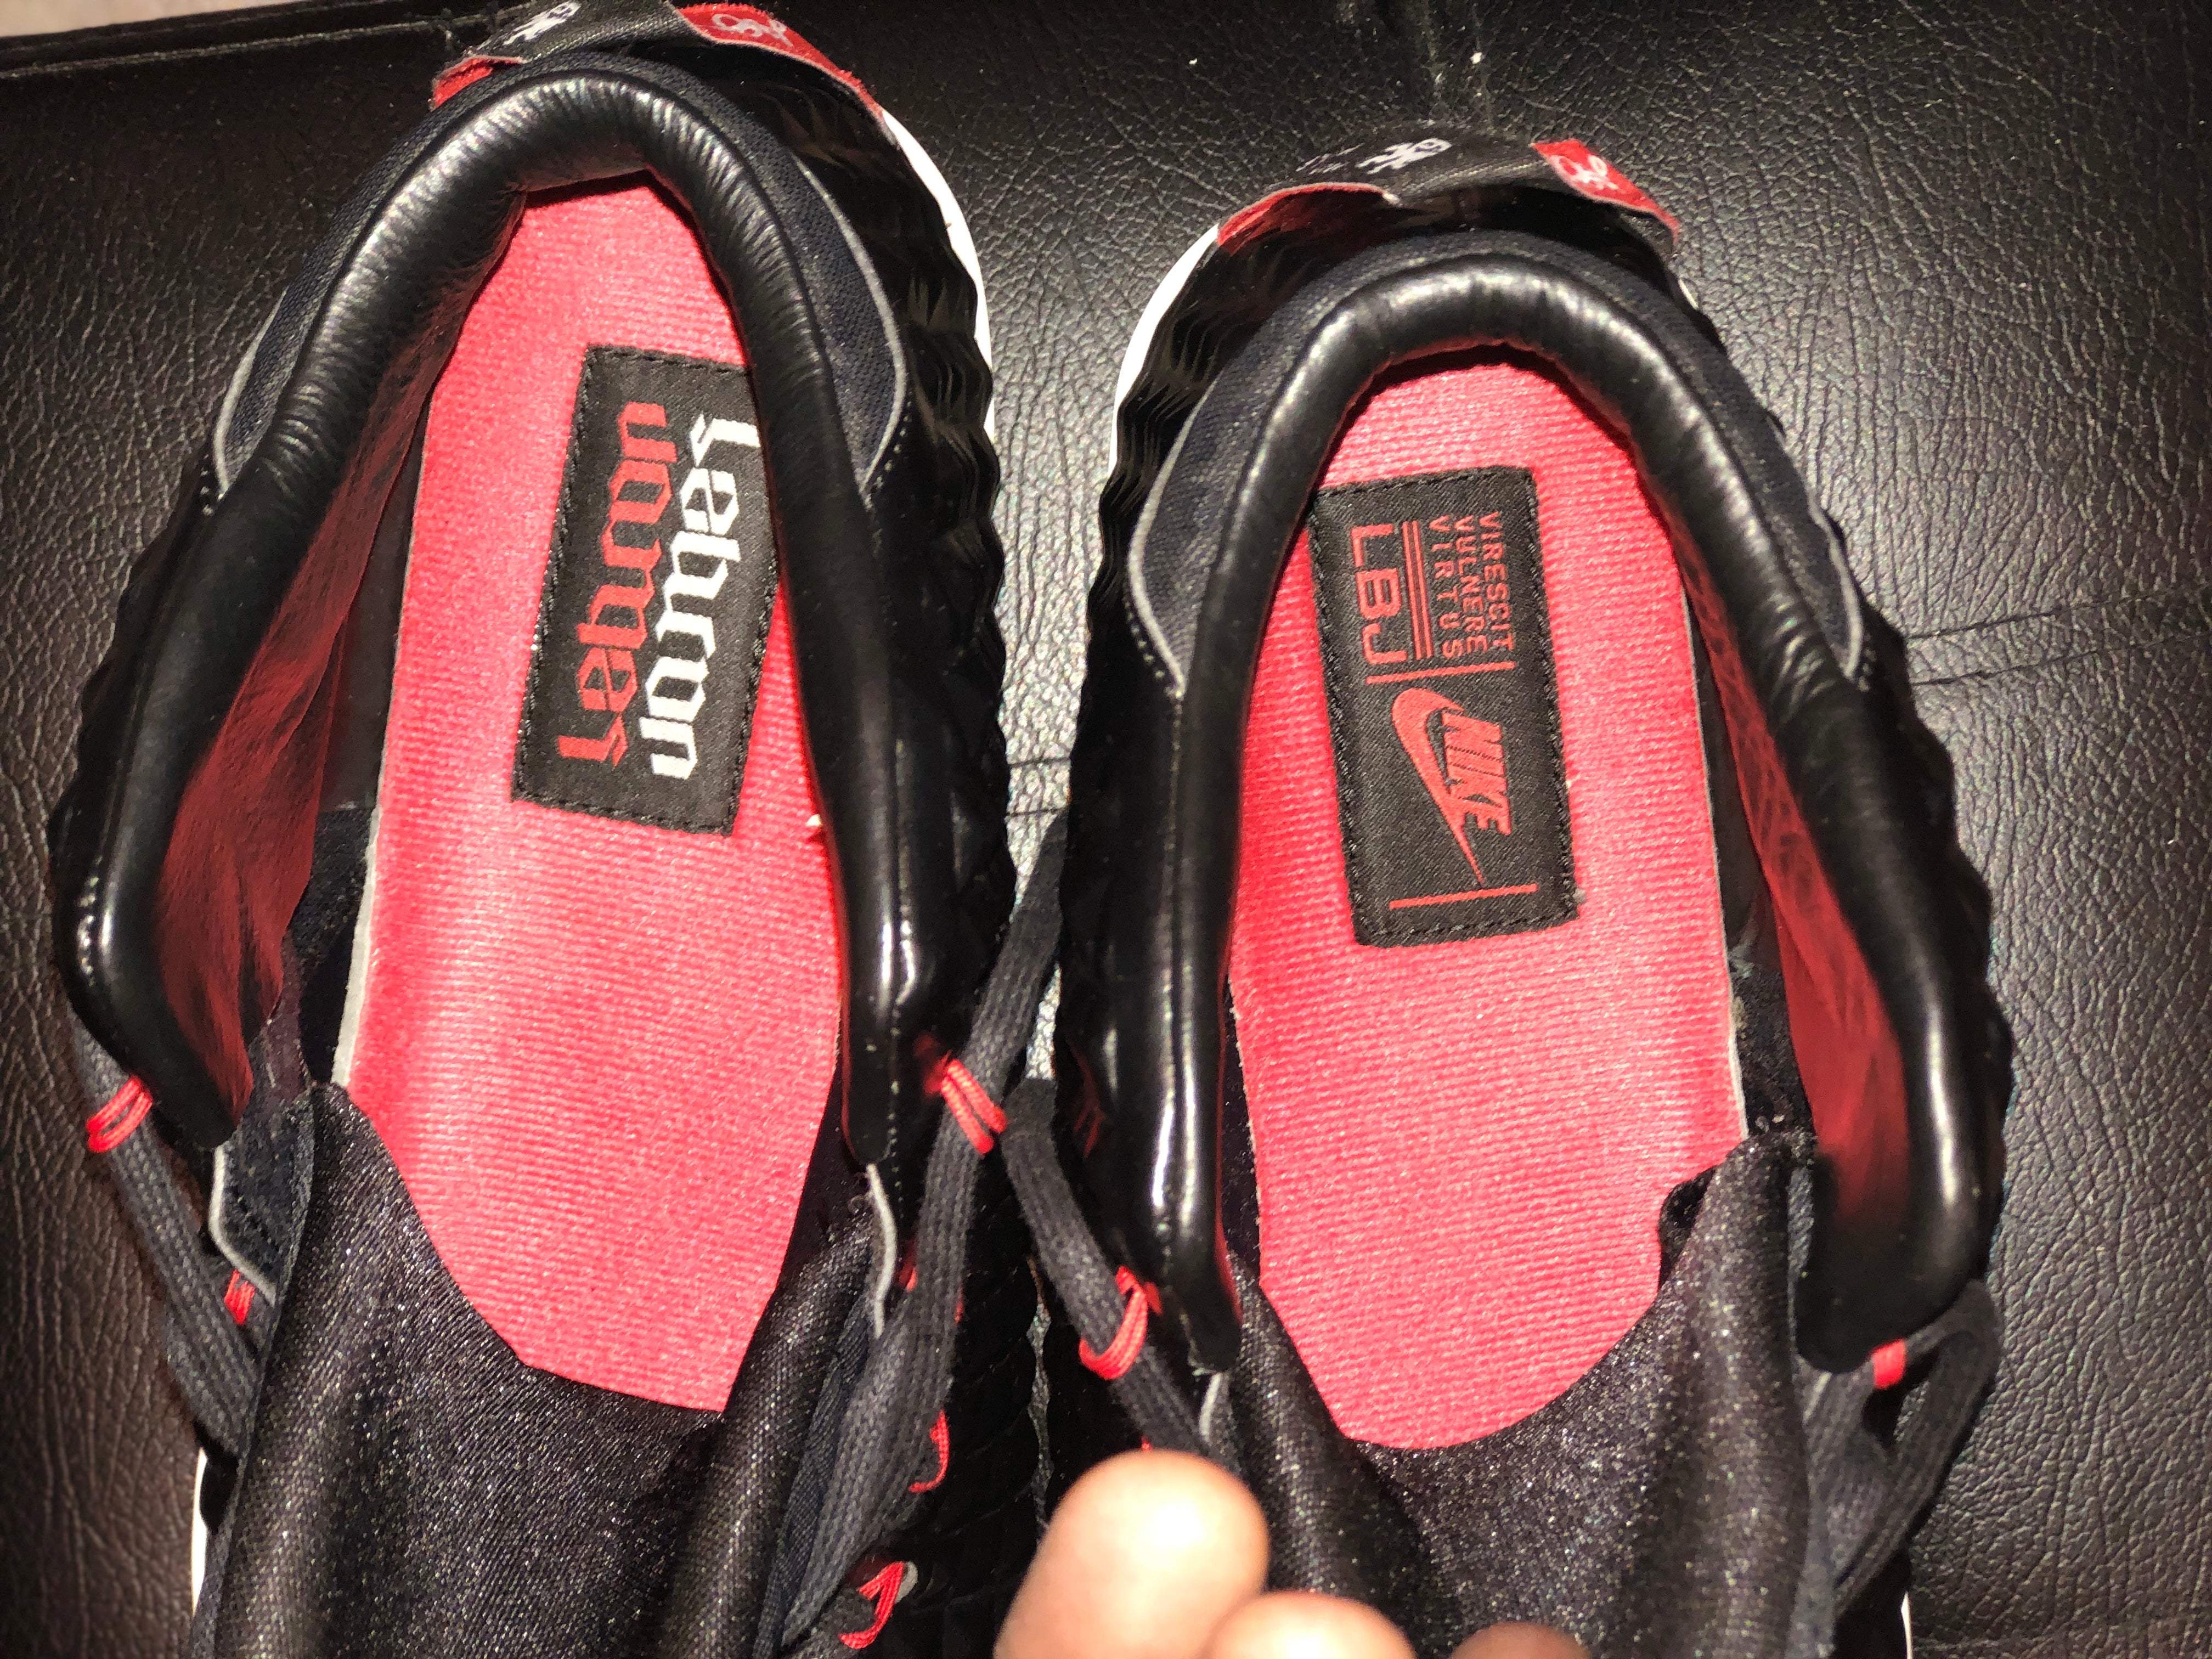 Lebron 12 NSW Lifestyle QS 'Black Challenge Red' - Sneaker-Veteranz